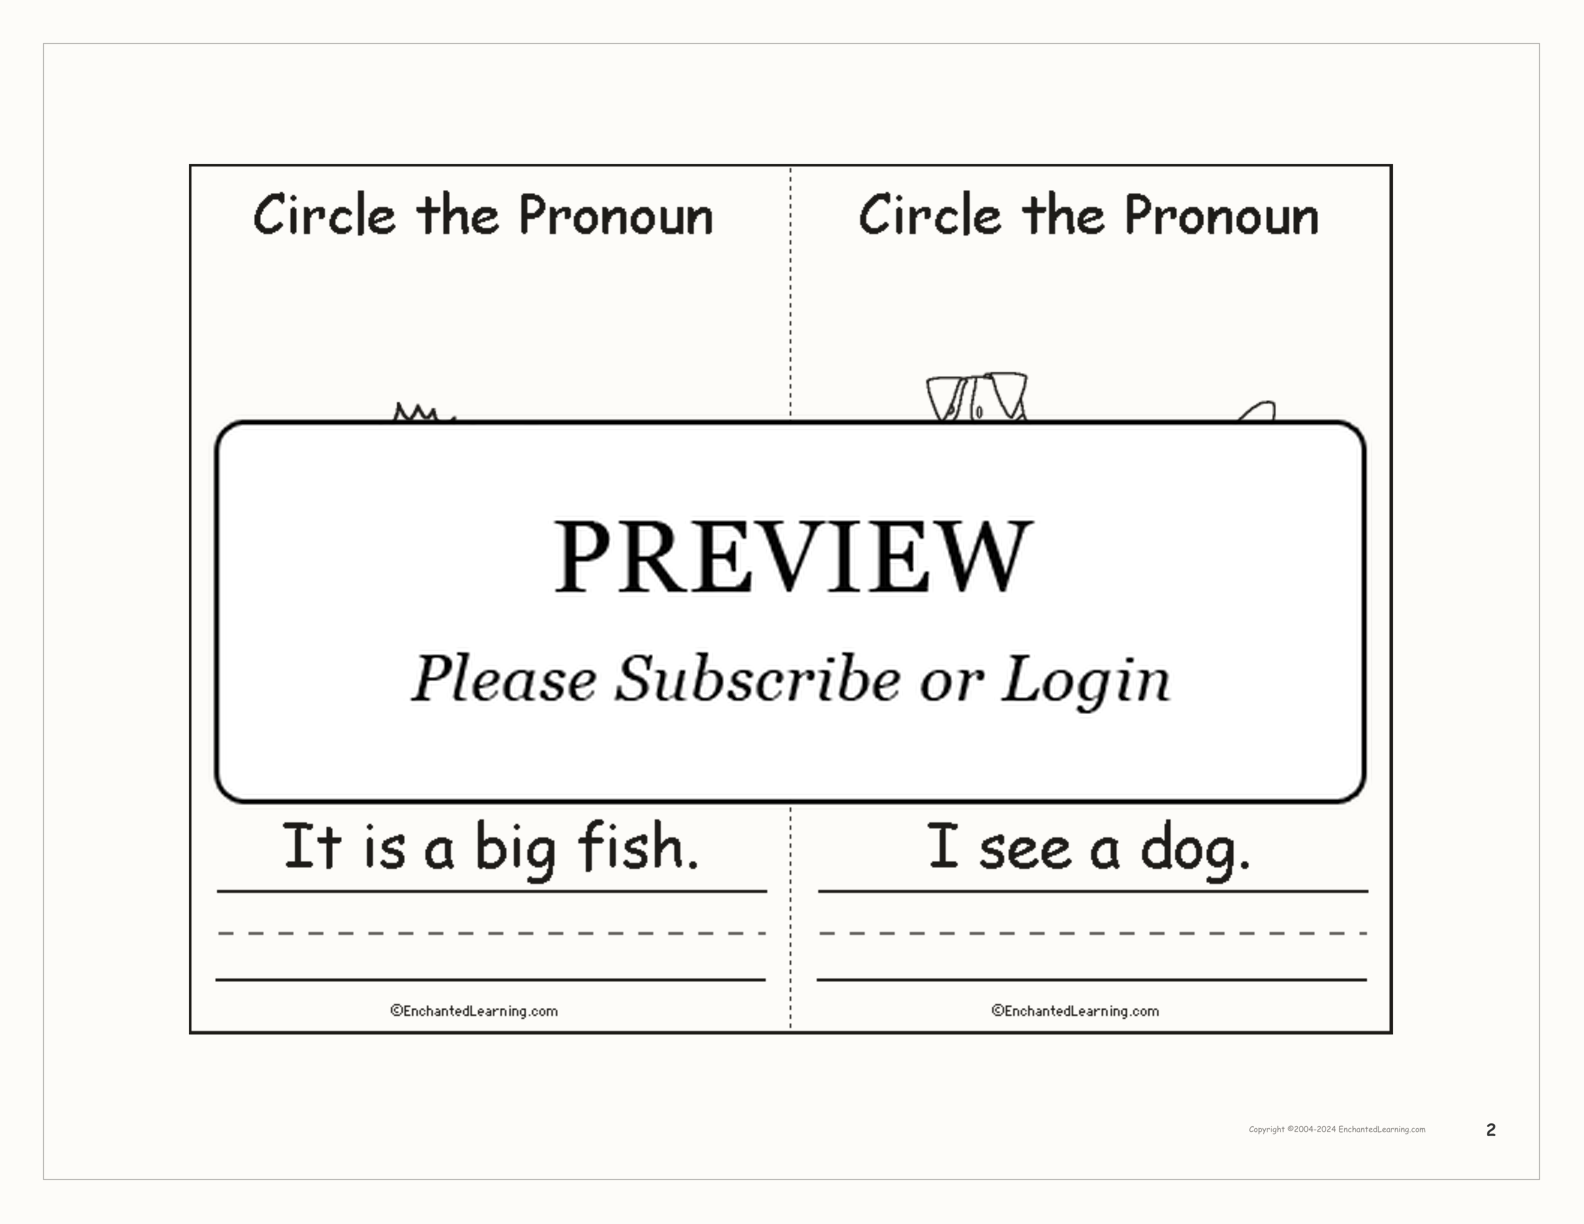 Circle the Pronouns Book interactive printout page 2